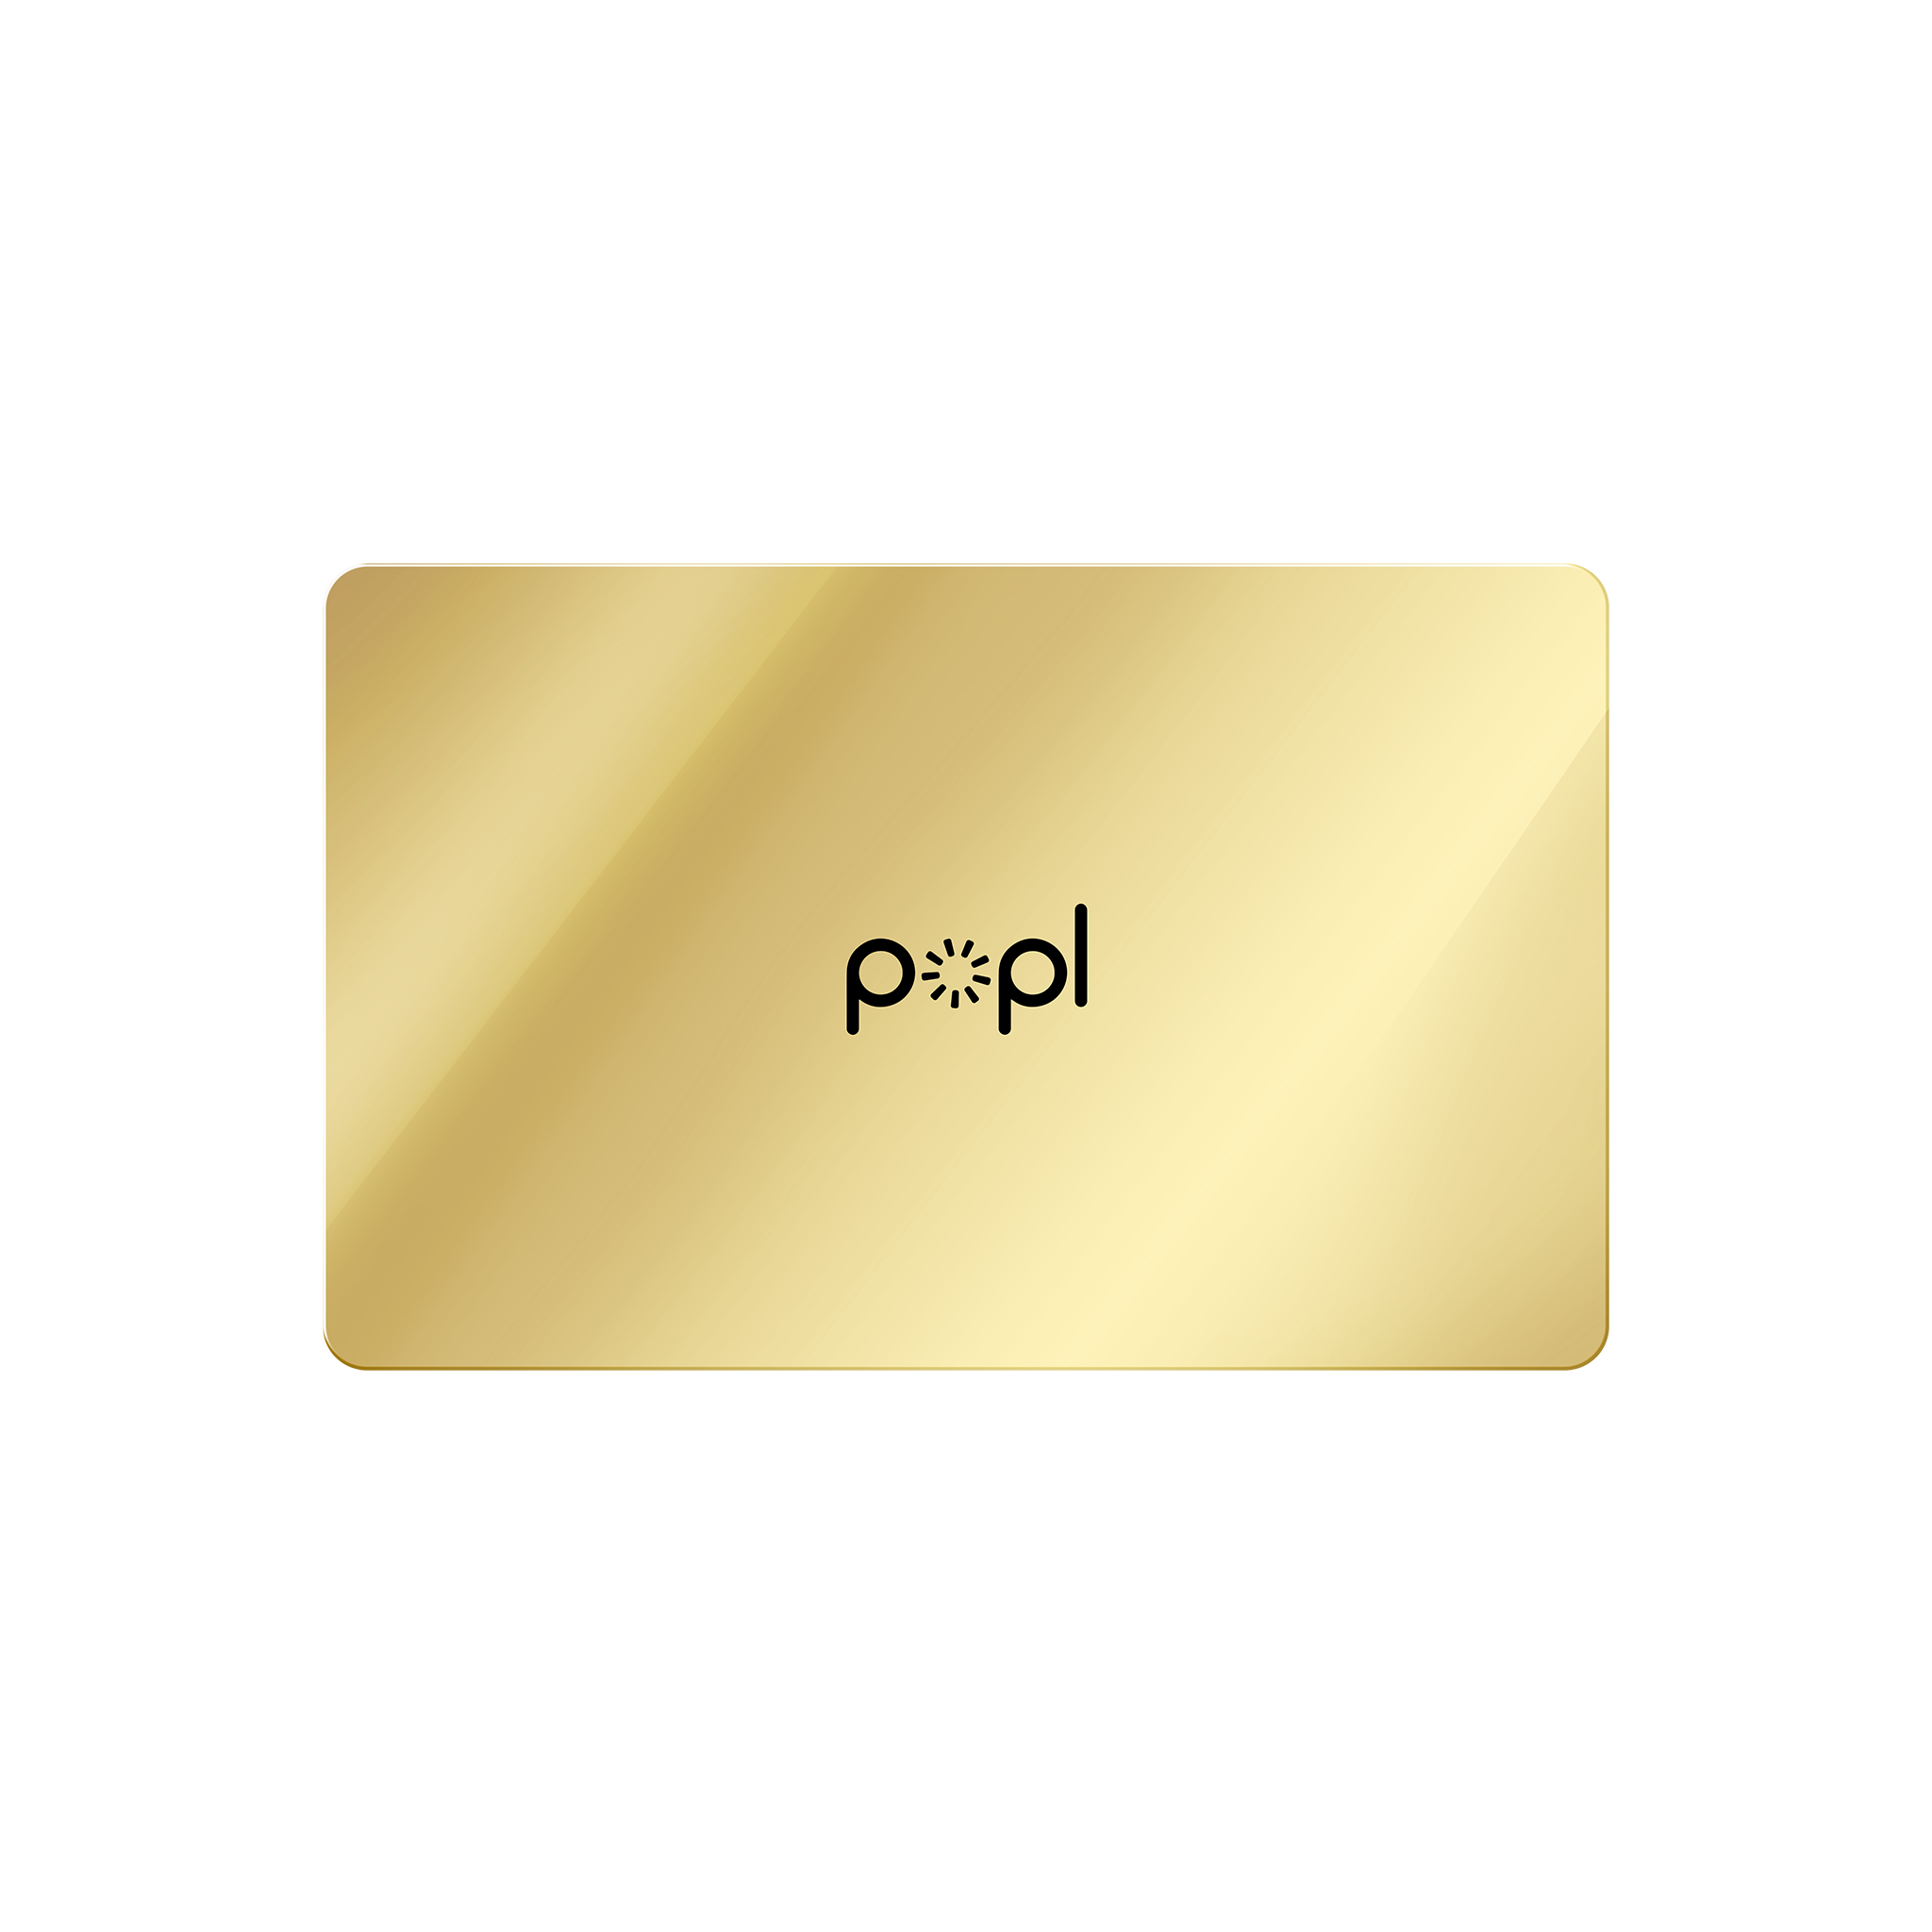 Popl digital business card